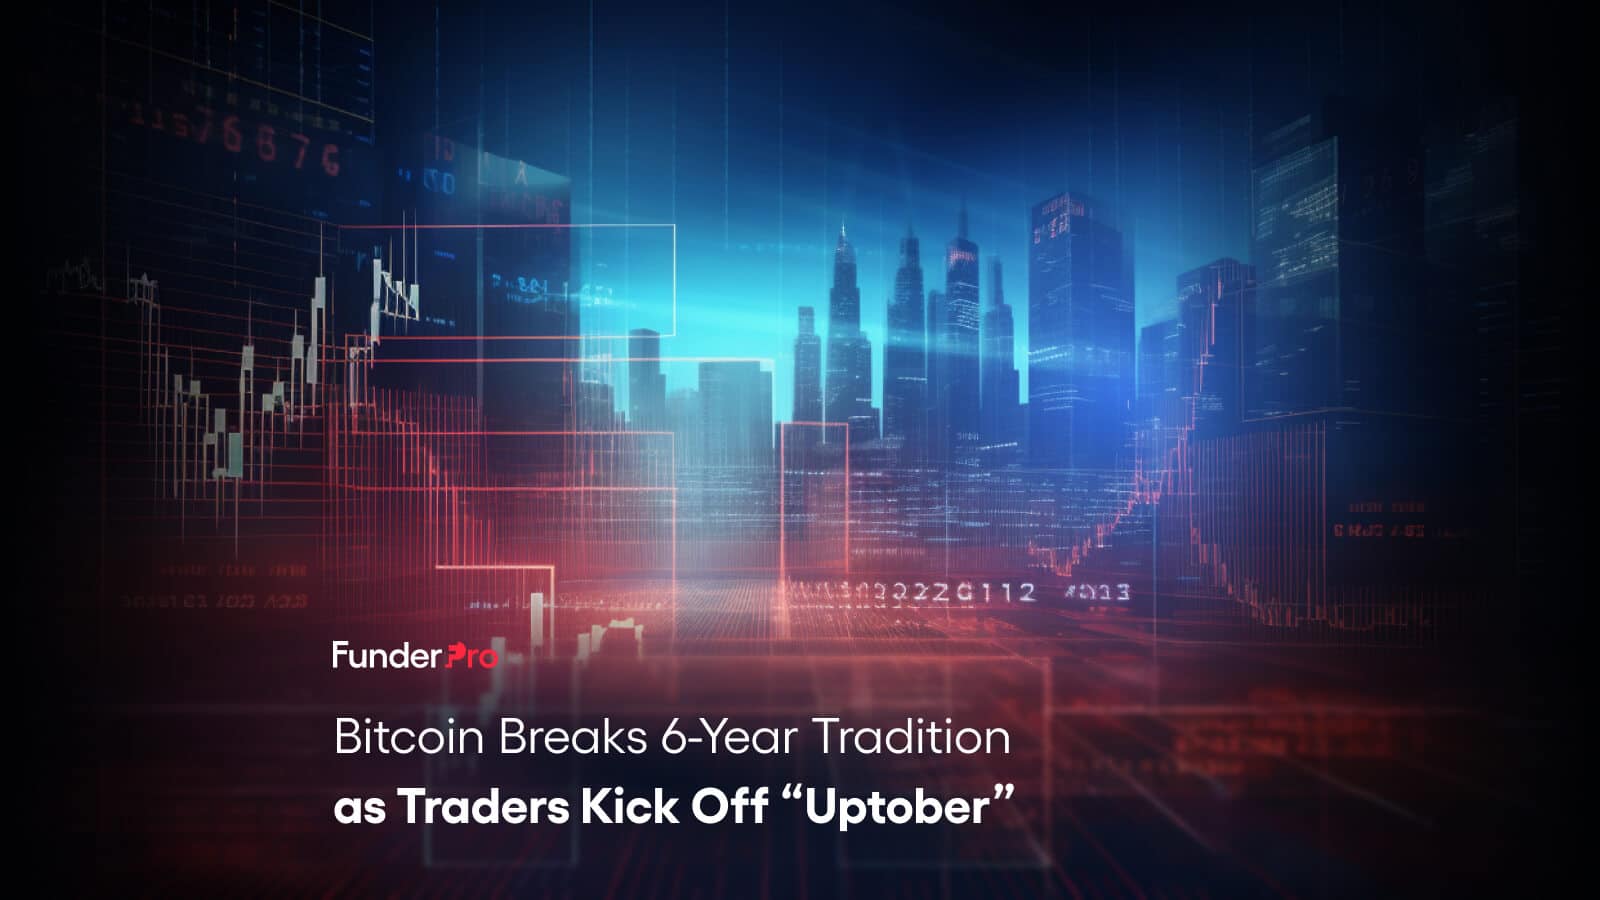 Bitcoin Breaks 6-Year Tradition as Traders Kick Off “Uptober”